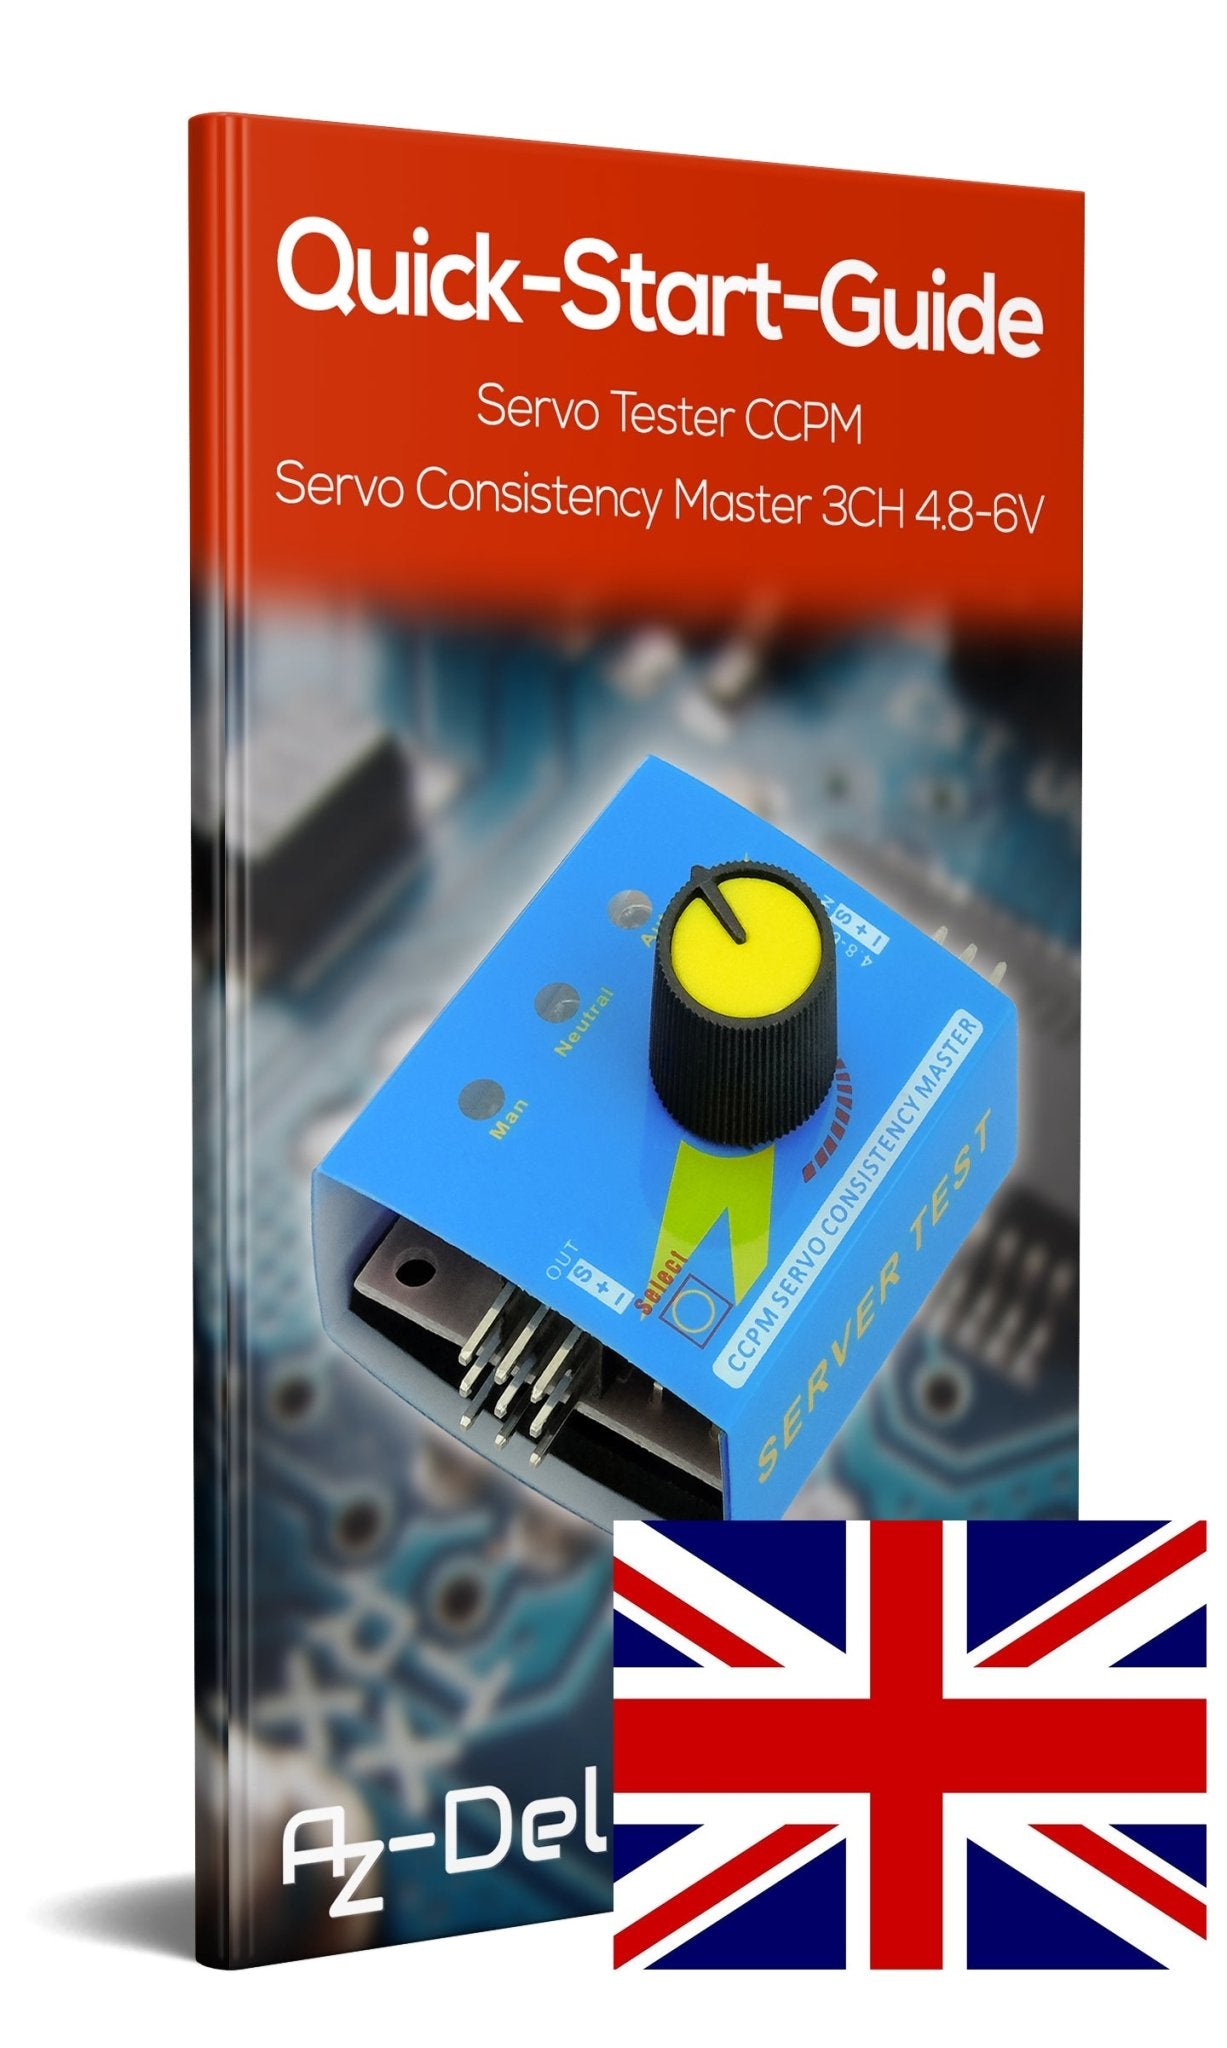 Servo Tester CCPM Servo Consistency Master 3CH 4.8-6V - AZ-Delivery